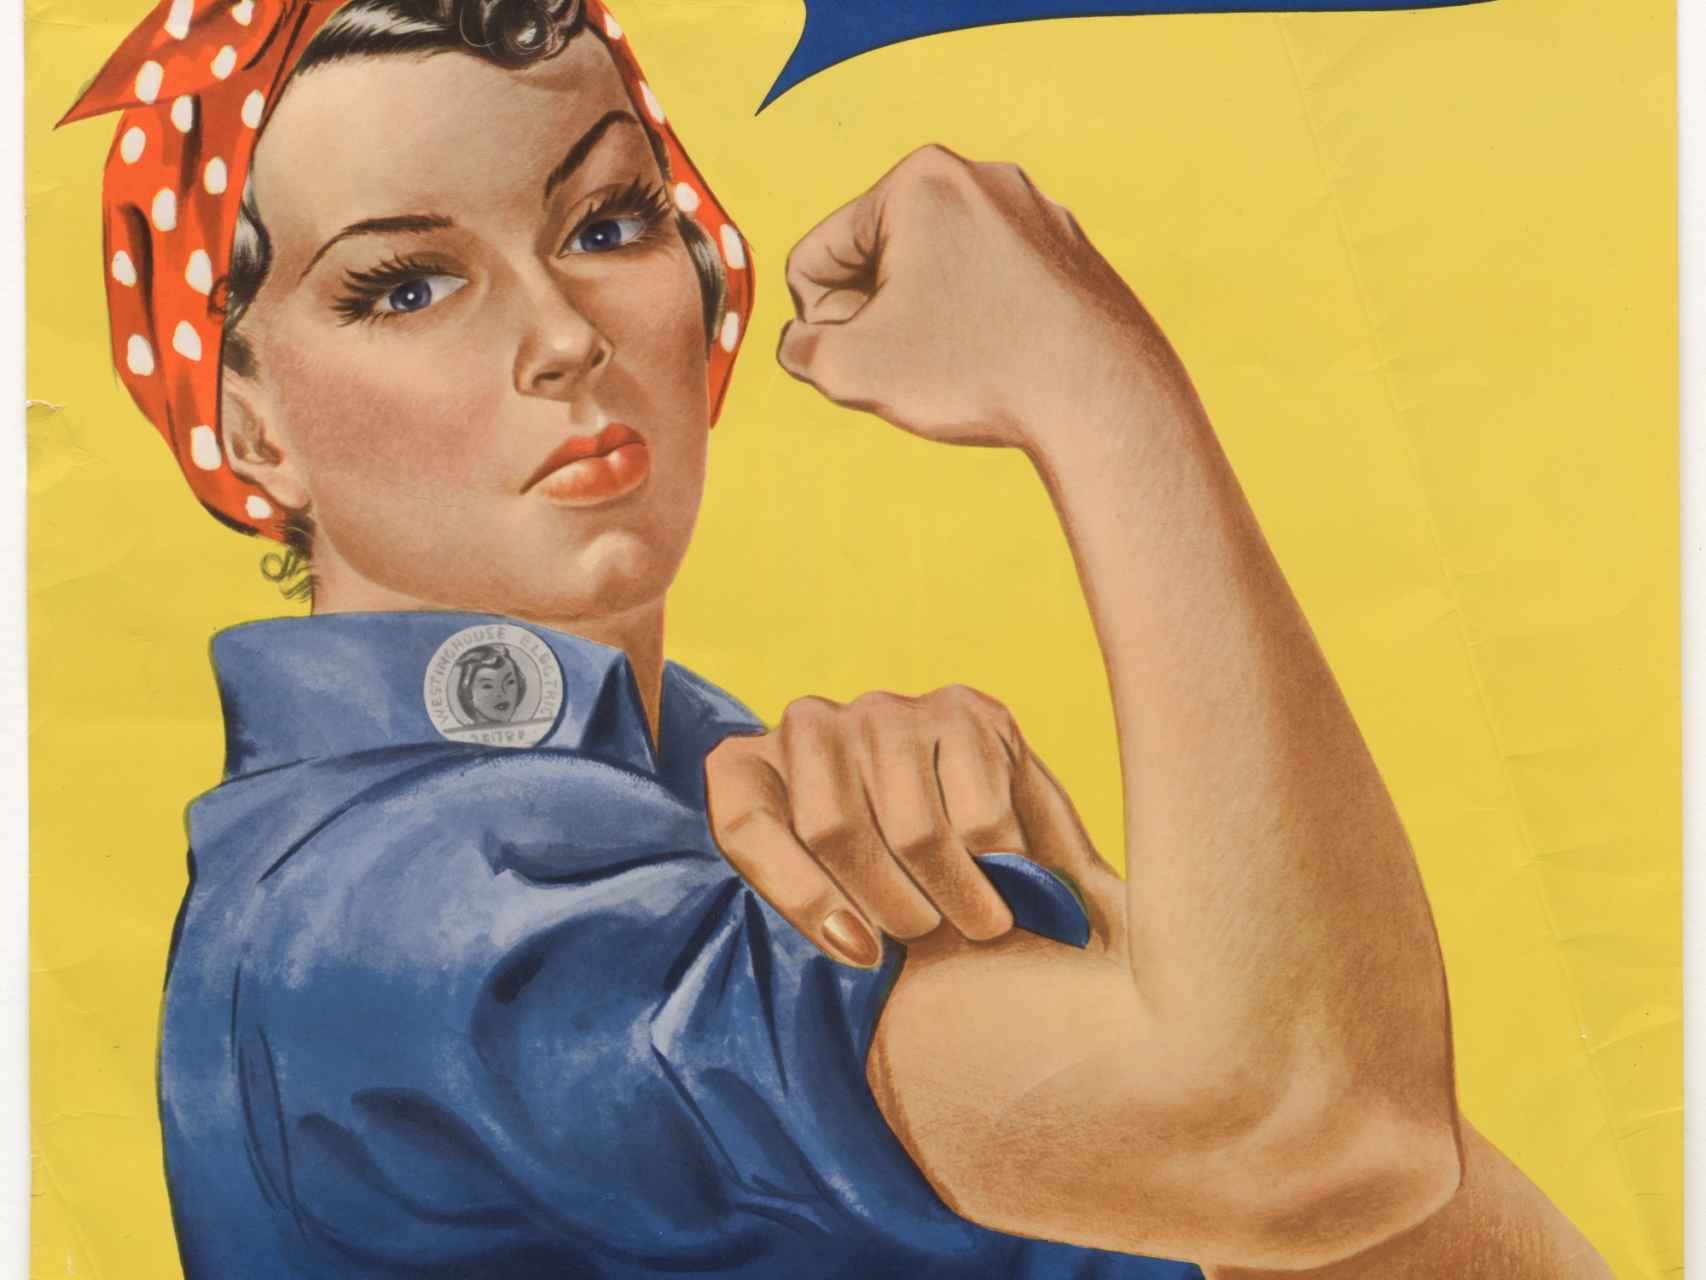 La verdadera historia del cartel que traiciona al feminismo